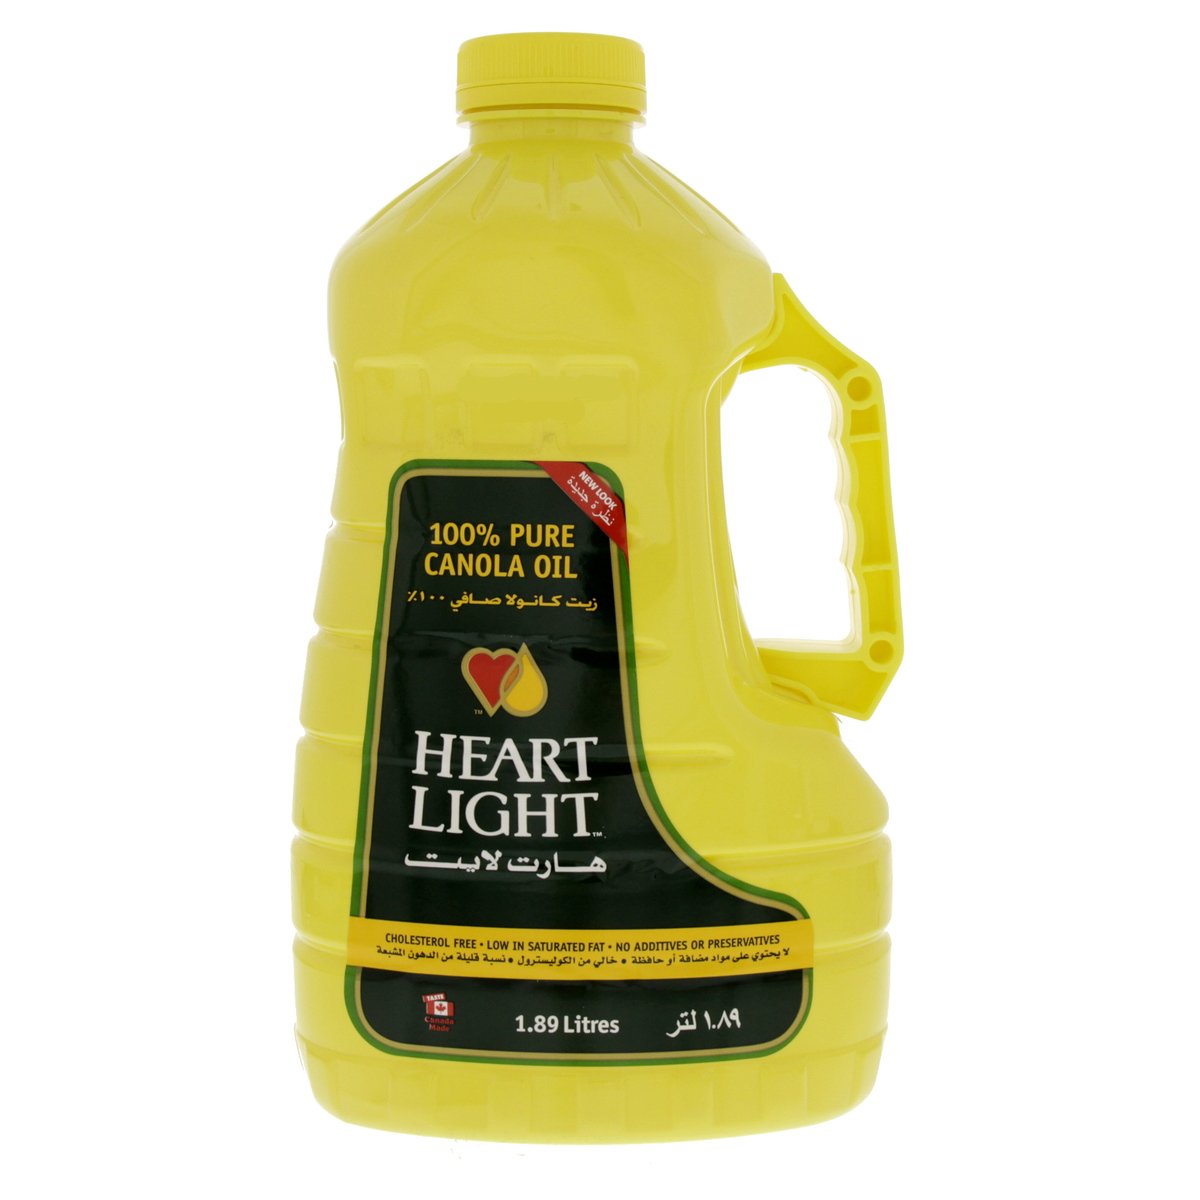 Heart Light Canola Oil 1.89 Litres